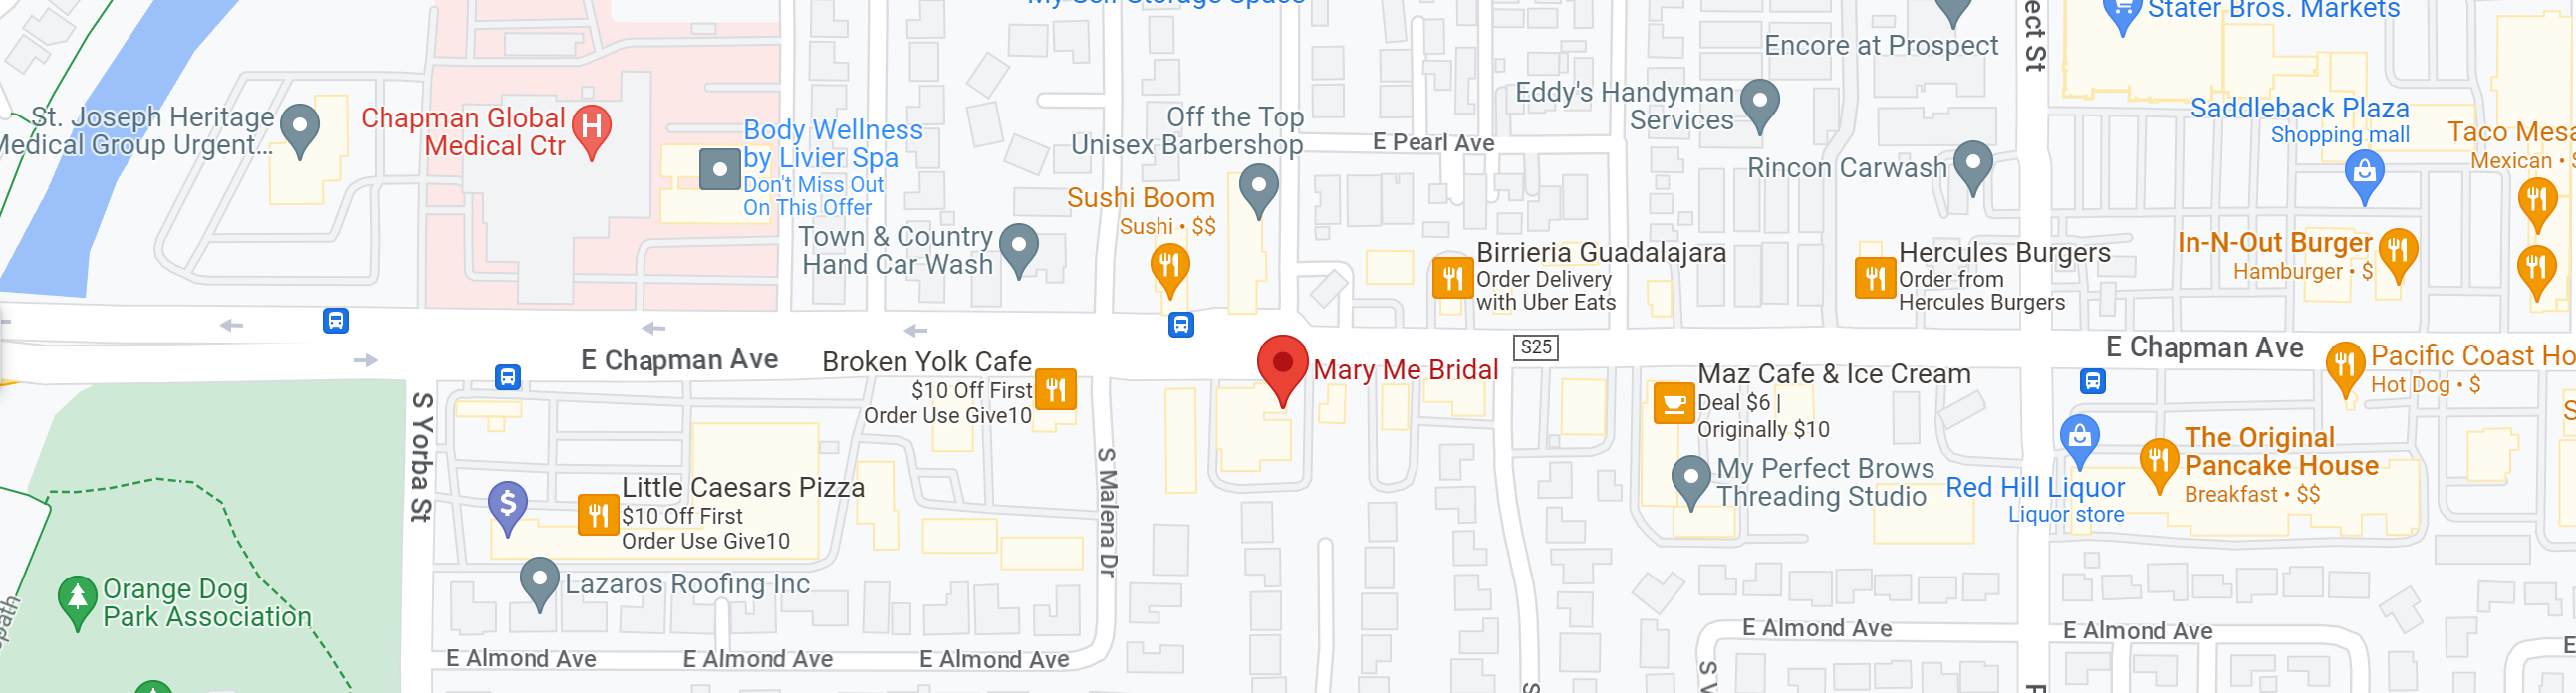 Mary Me Bridal google maps image for desktop